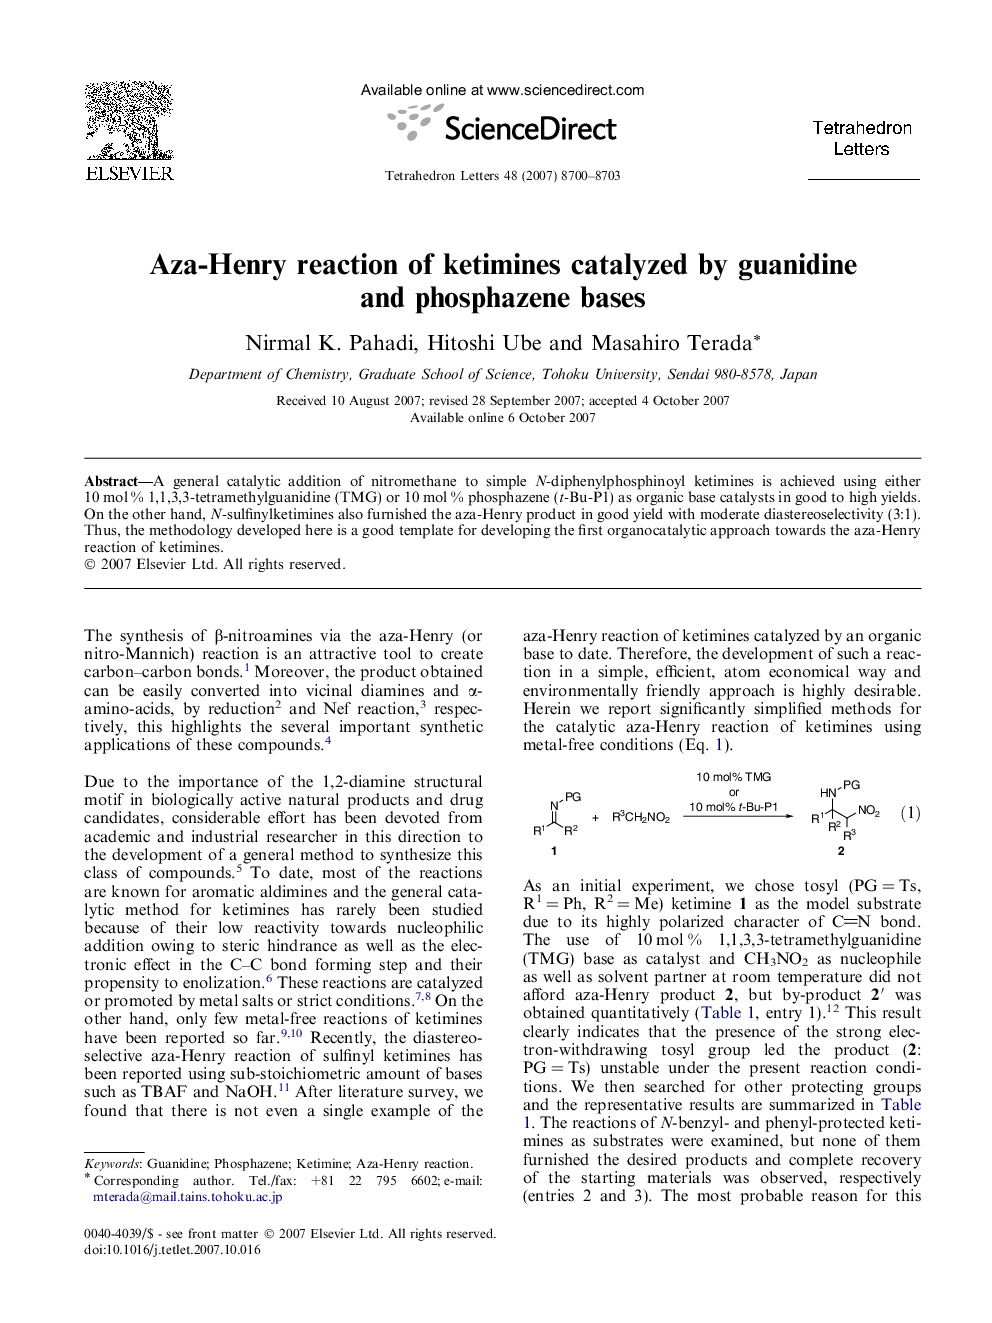 Aza-Henry reaction of ketimines catalyzed by guanidine and phosphazene bases